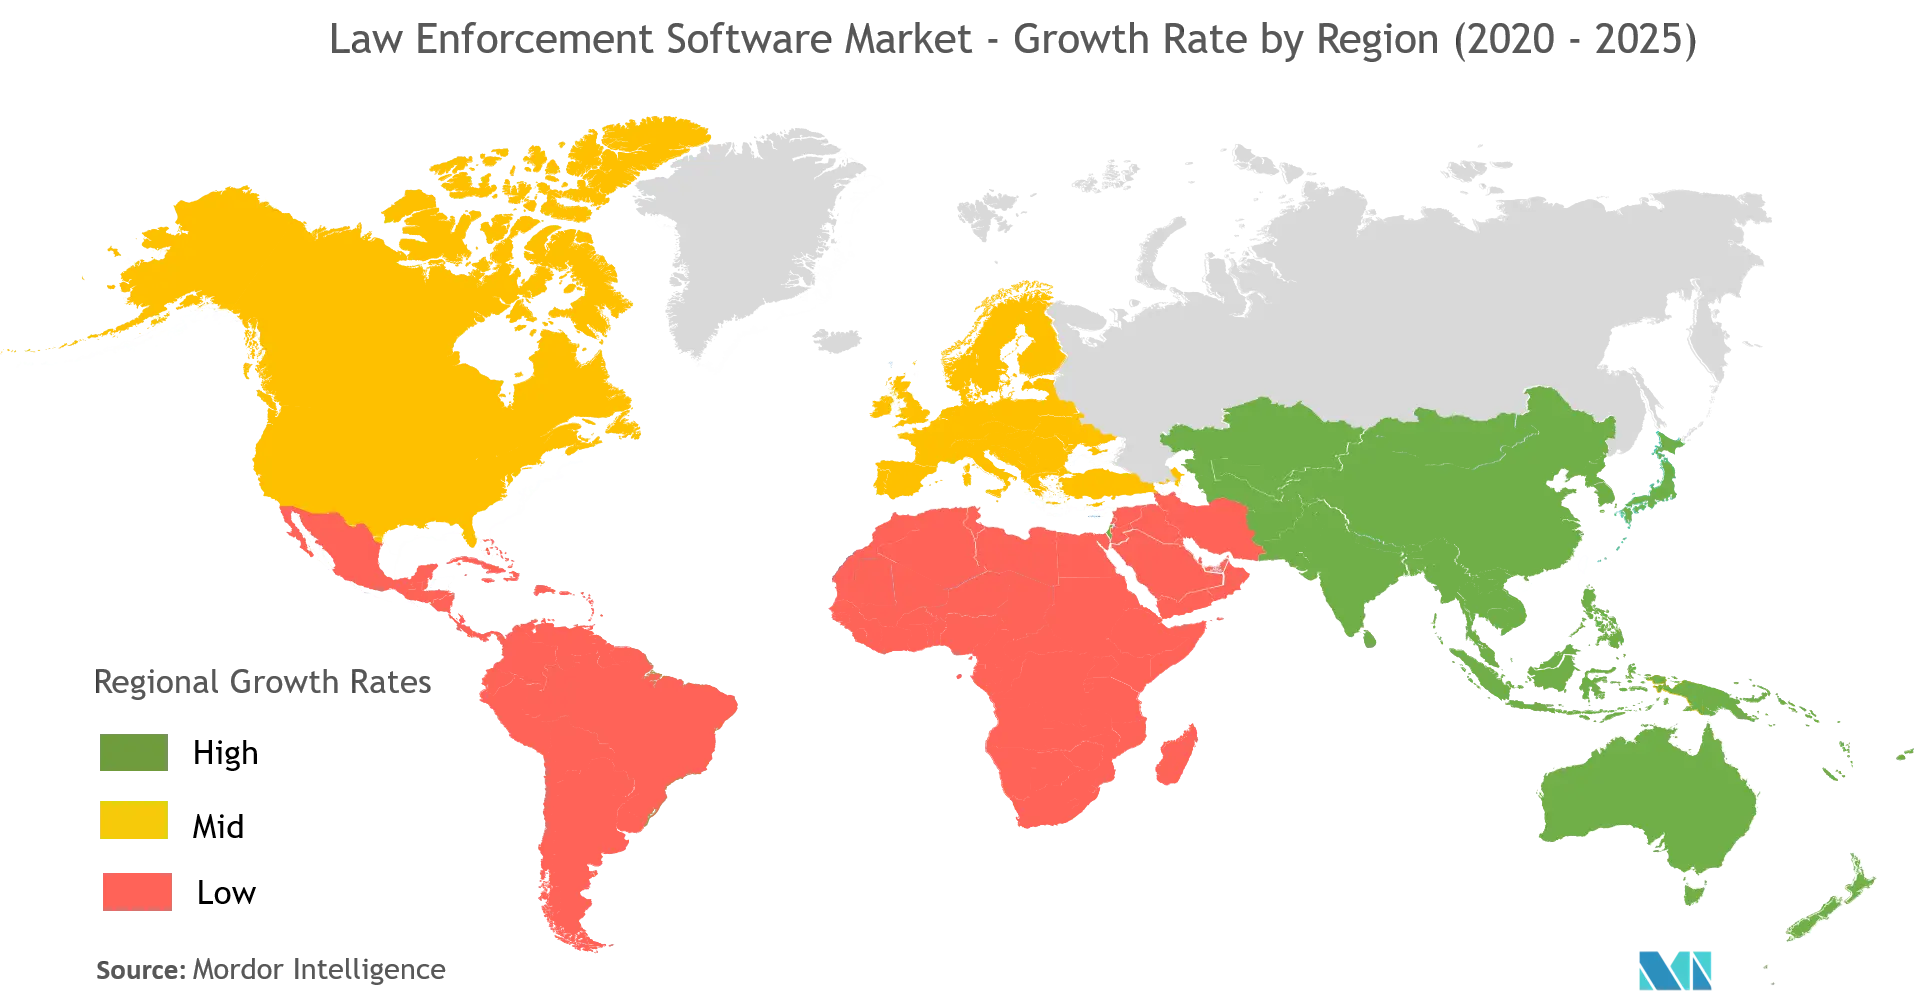 law enforcement software market share